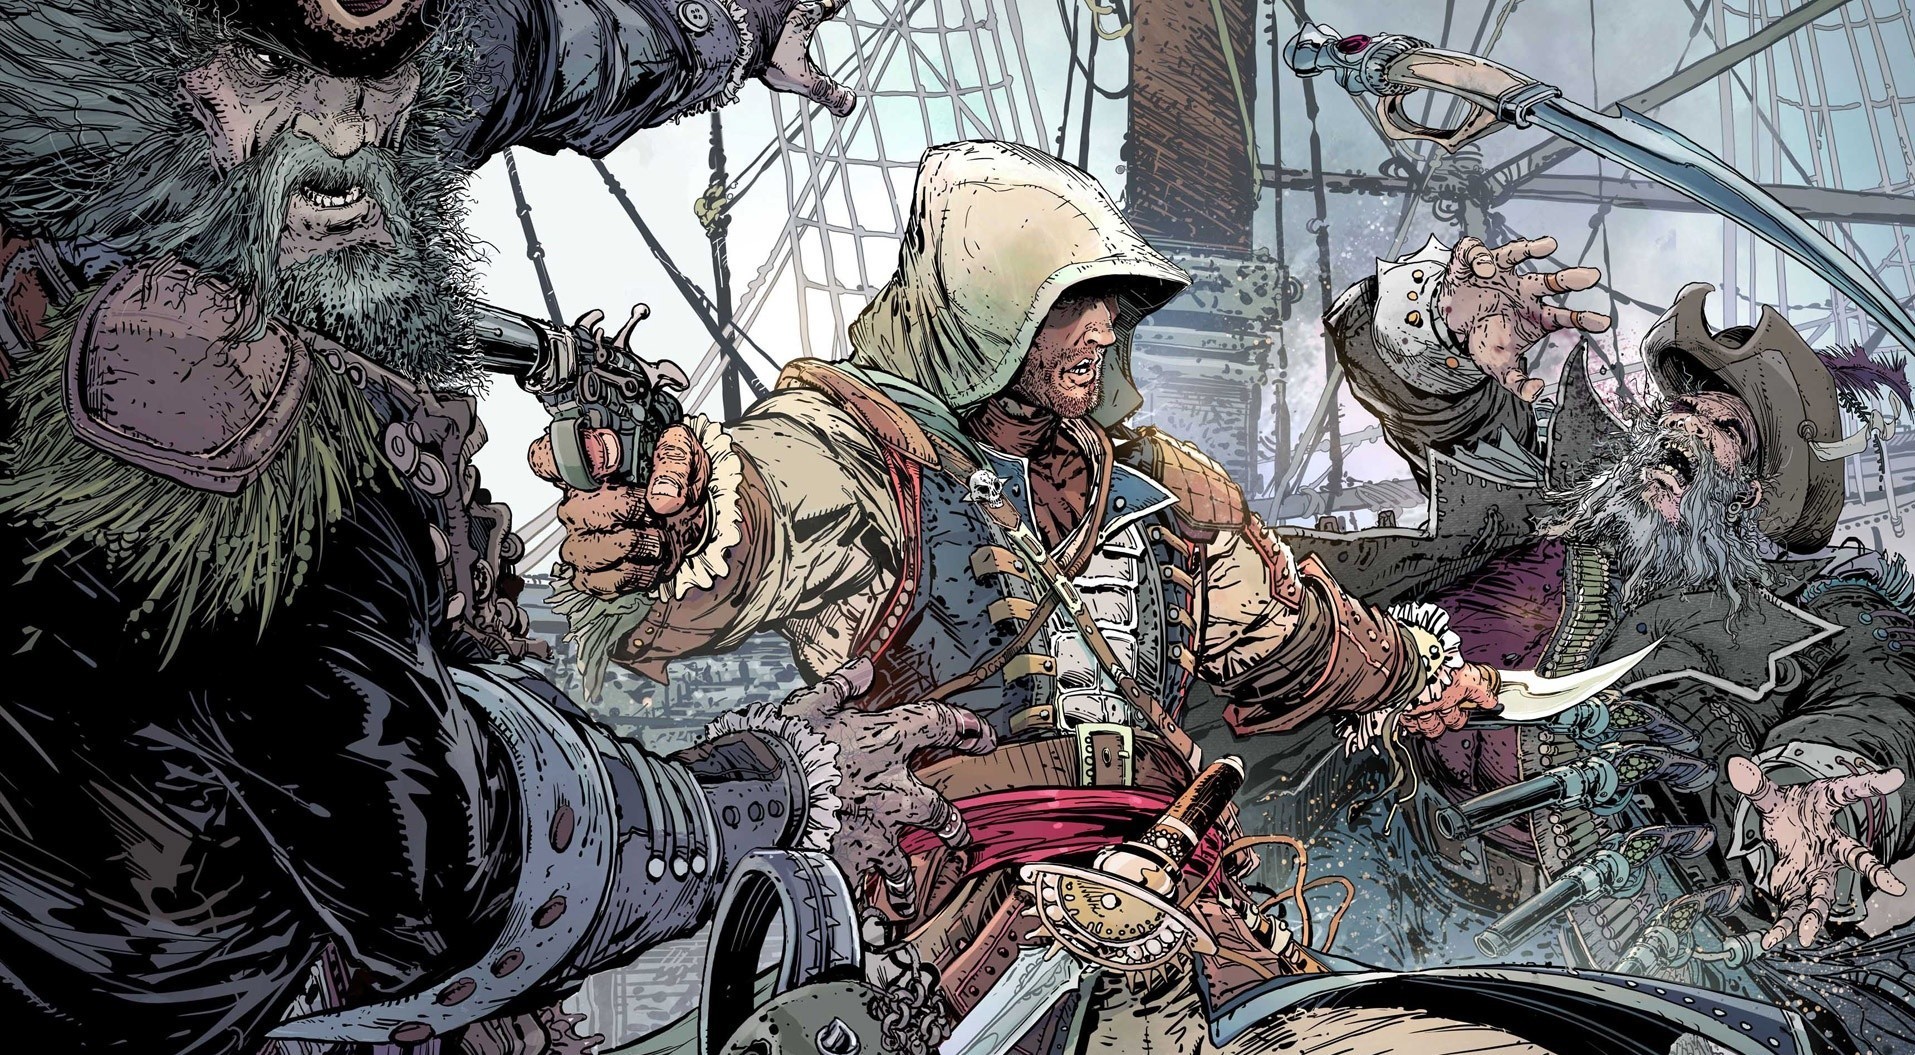 General 1915x1055 Assassin's Creed: Black Flag Edward Kenway video games PC gaming video game art video game men gun weapon hoods pirates dual wield